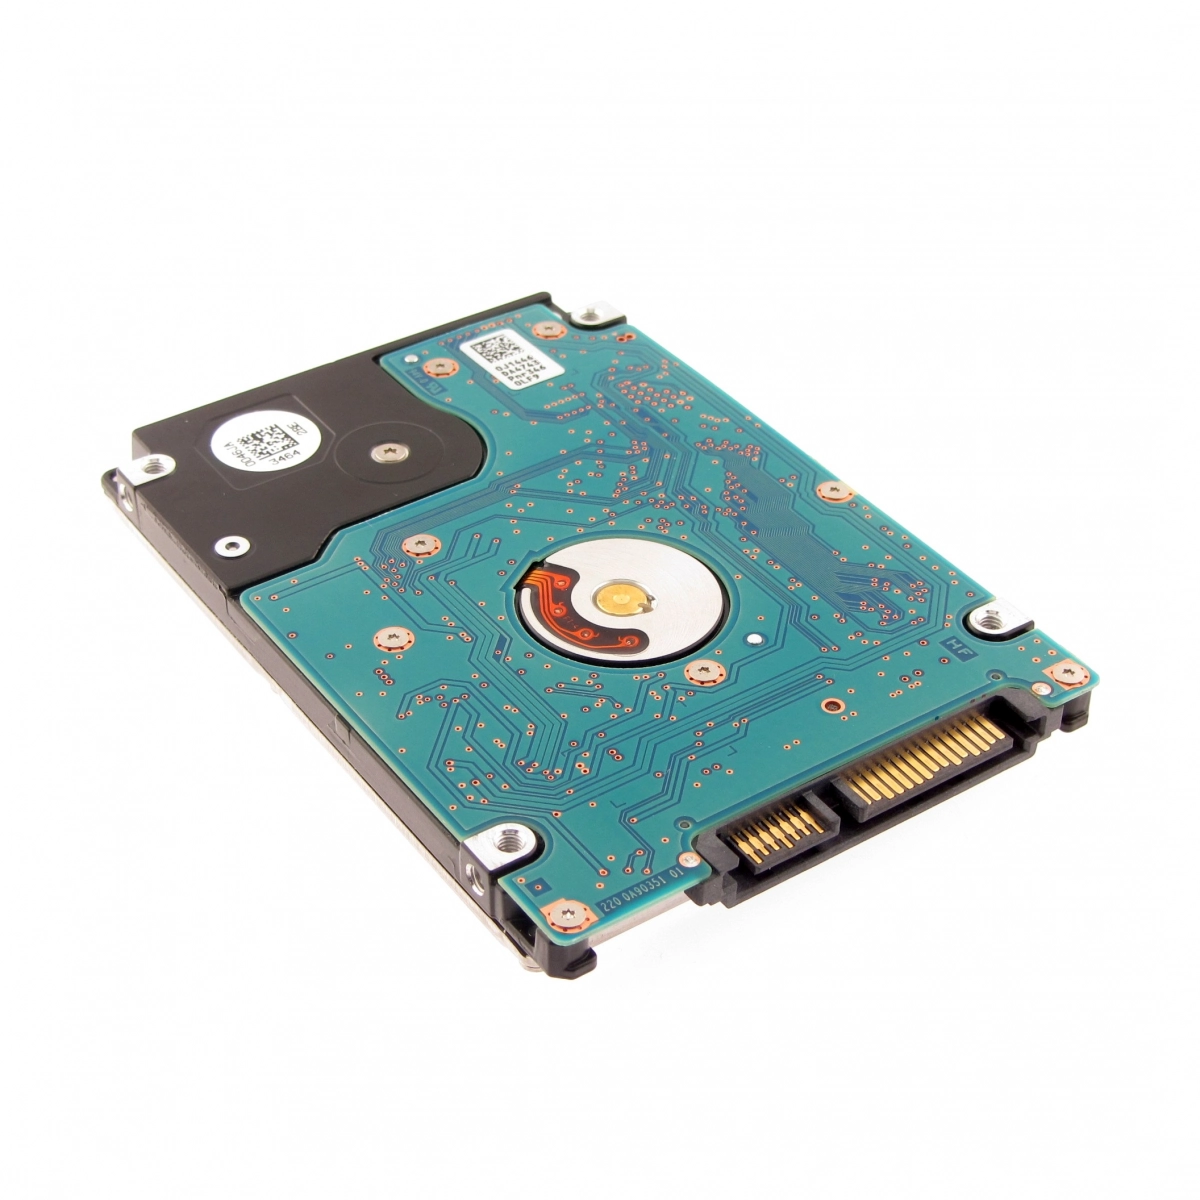 Notebook-Festplatte 1TB, 7mm, 7200rpm, 128MB für DELL Latitude E6420 ATG